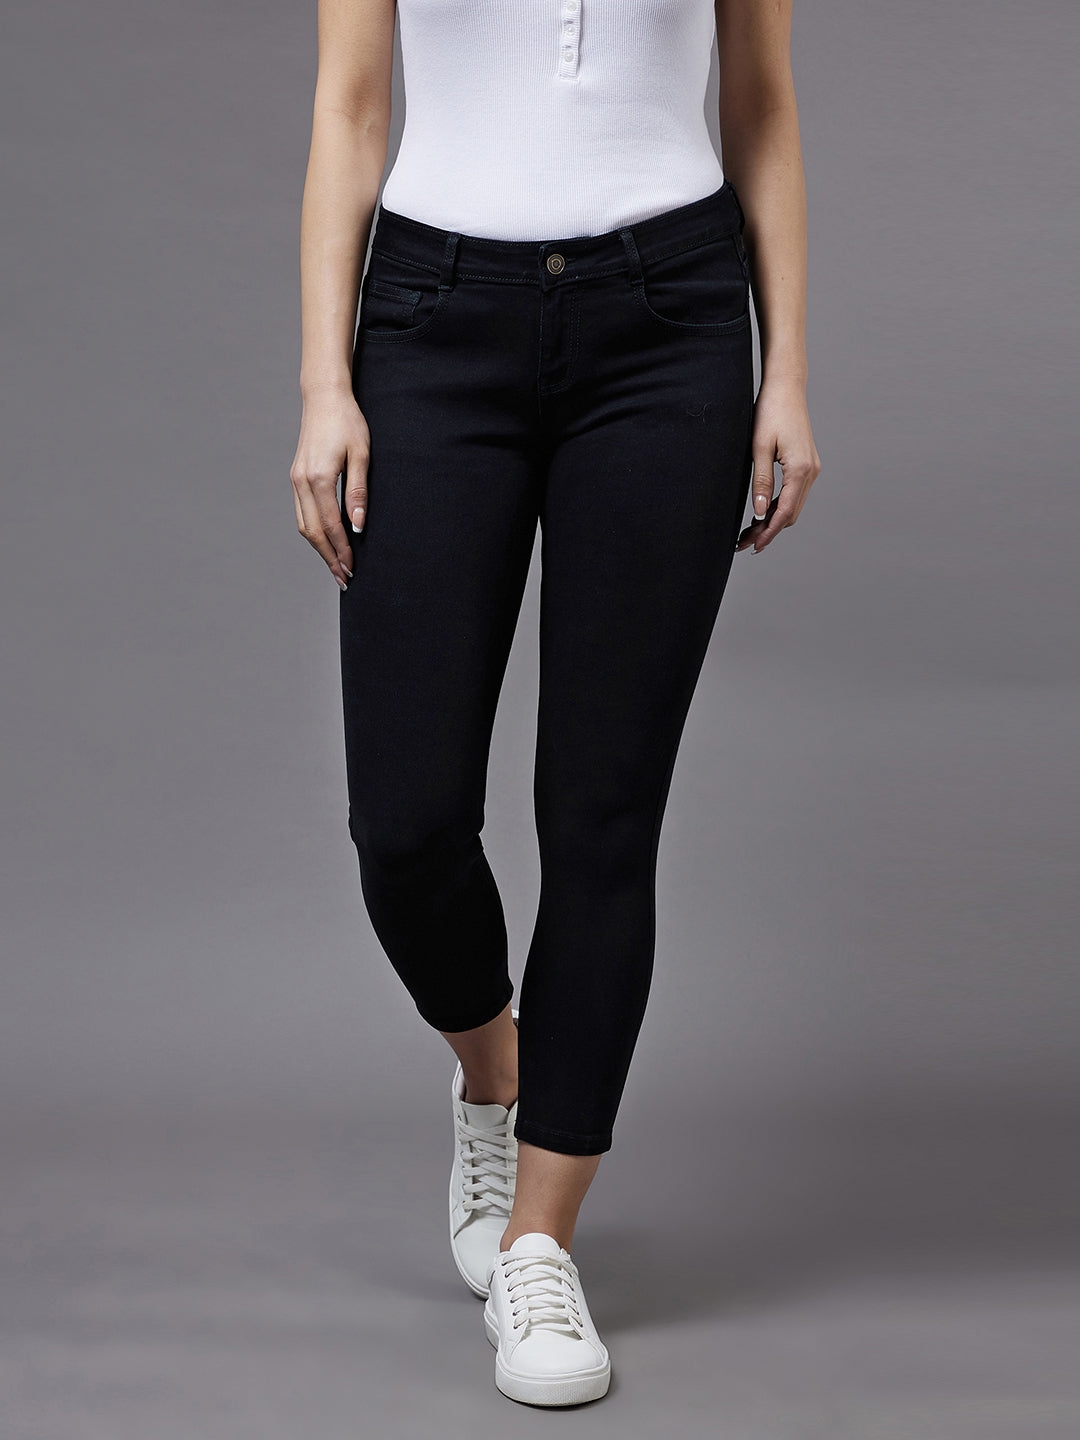 Women's Black Solid Skinny Jeans